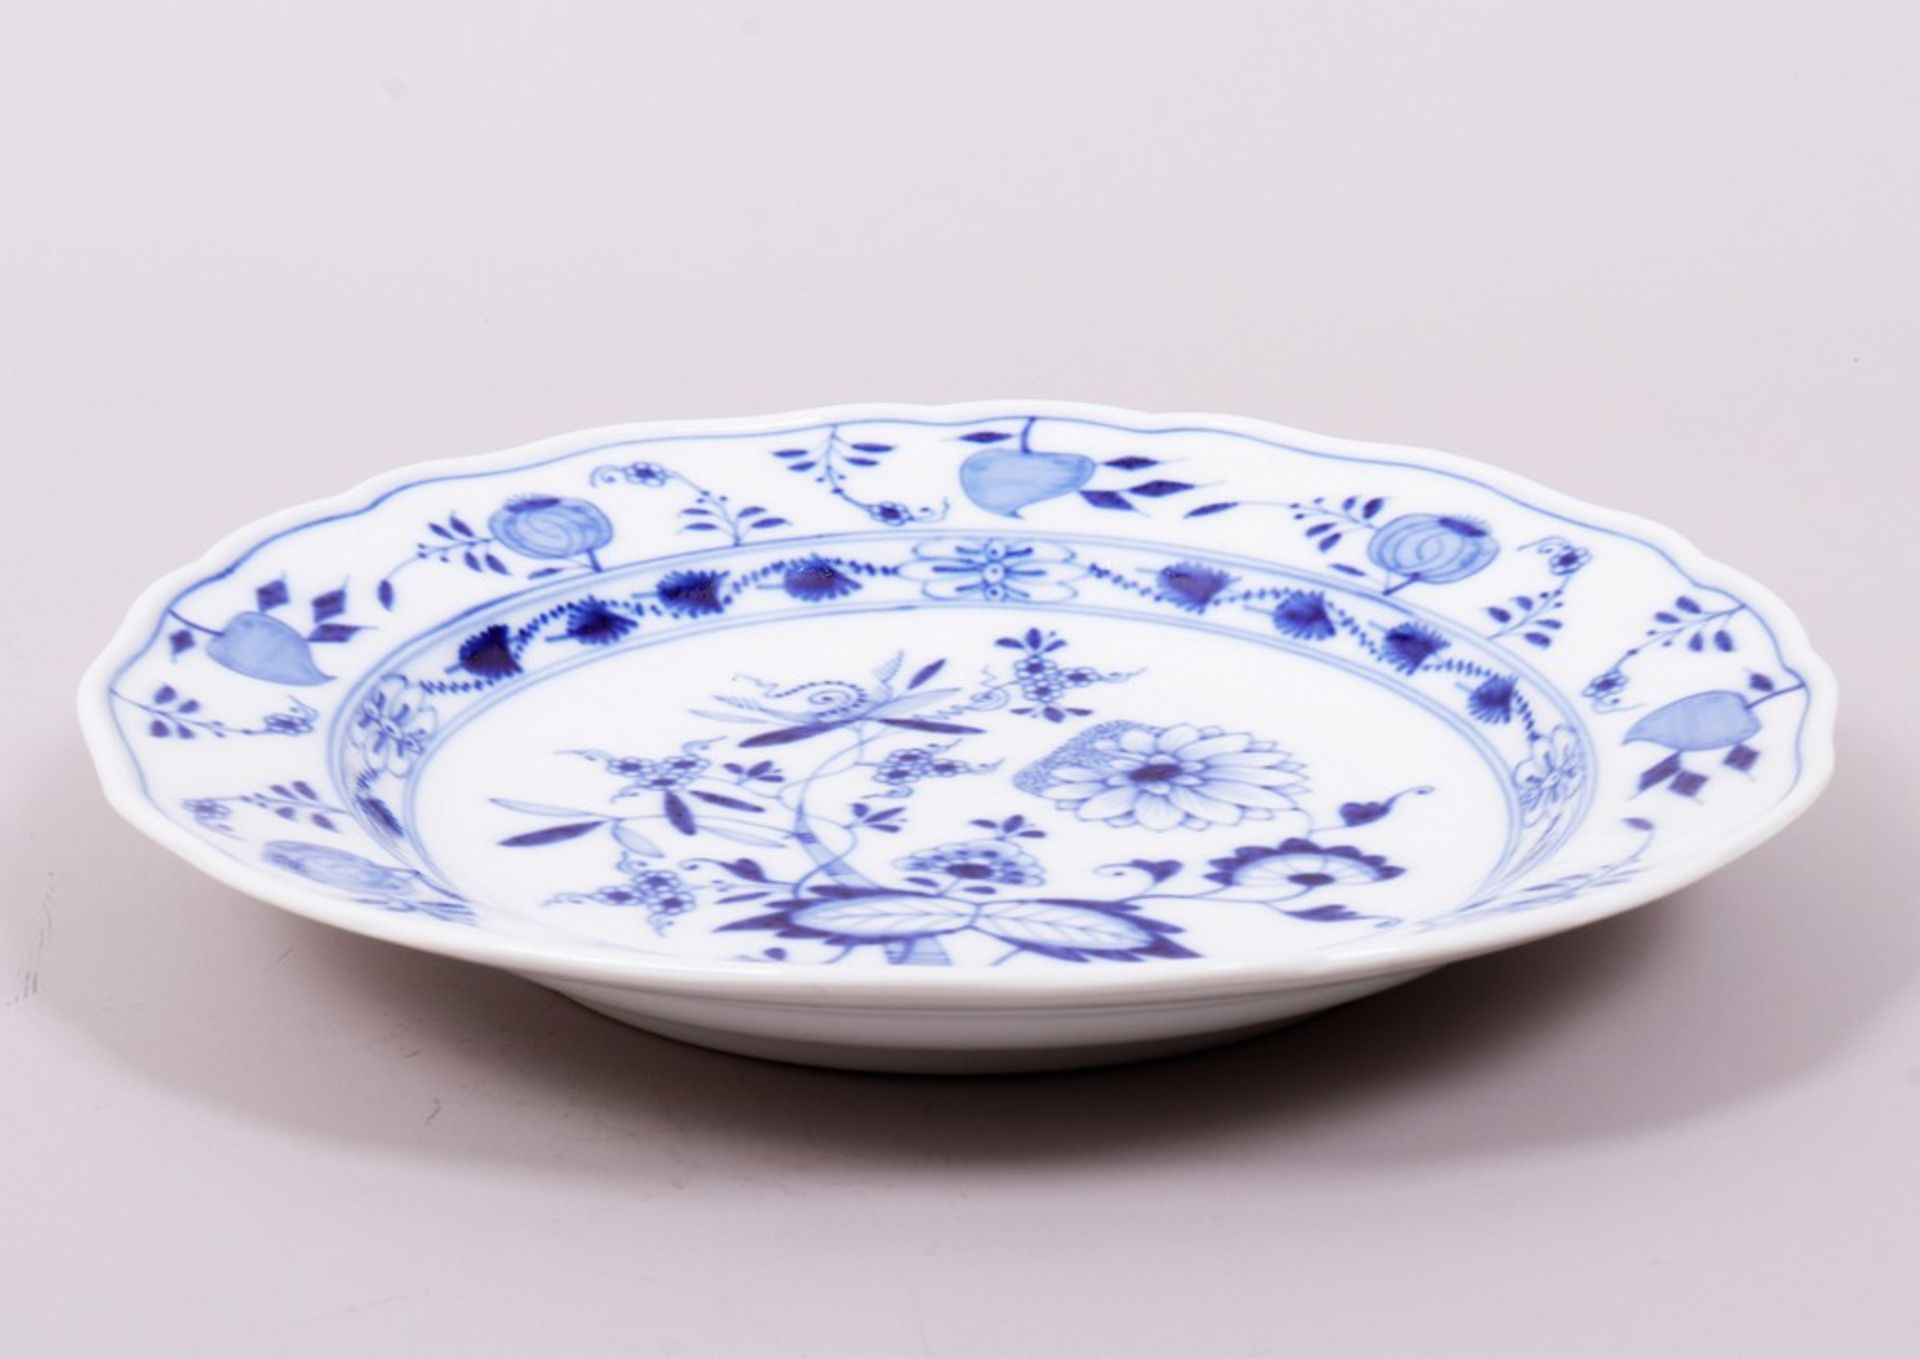 1 plate, Meissen, shape “Neuer Ausschnitt”, decor “onion pattern”, pommel swords, 2nd choice - Image 3 of 5